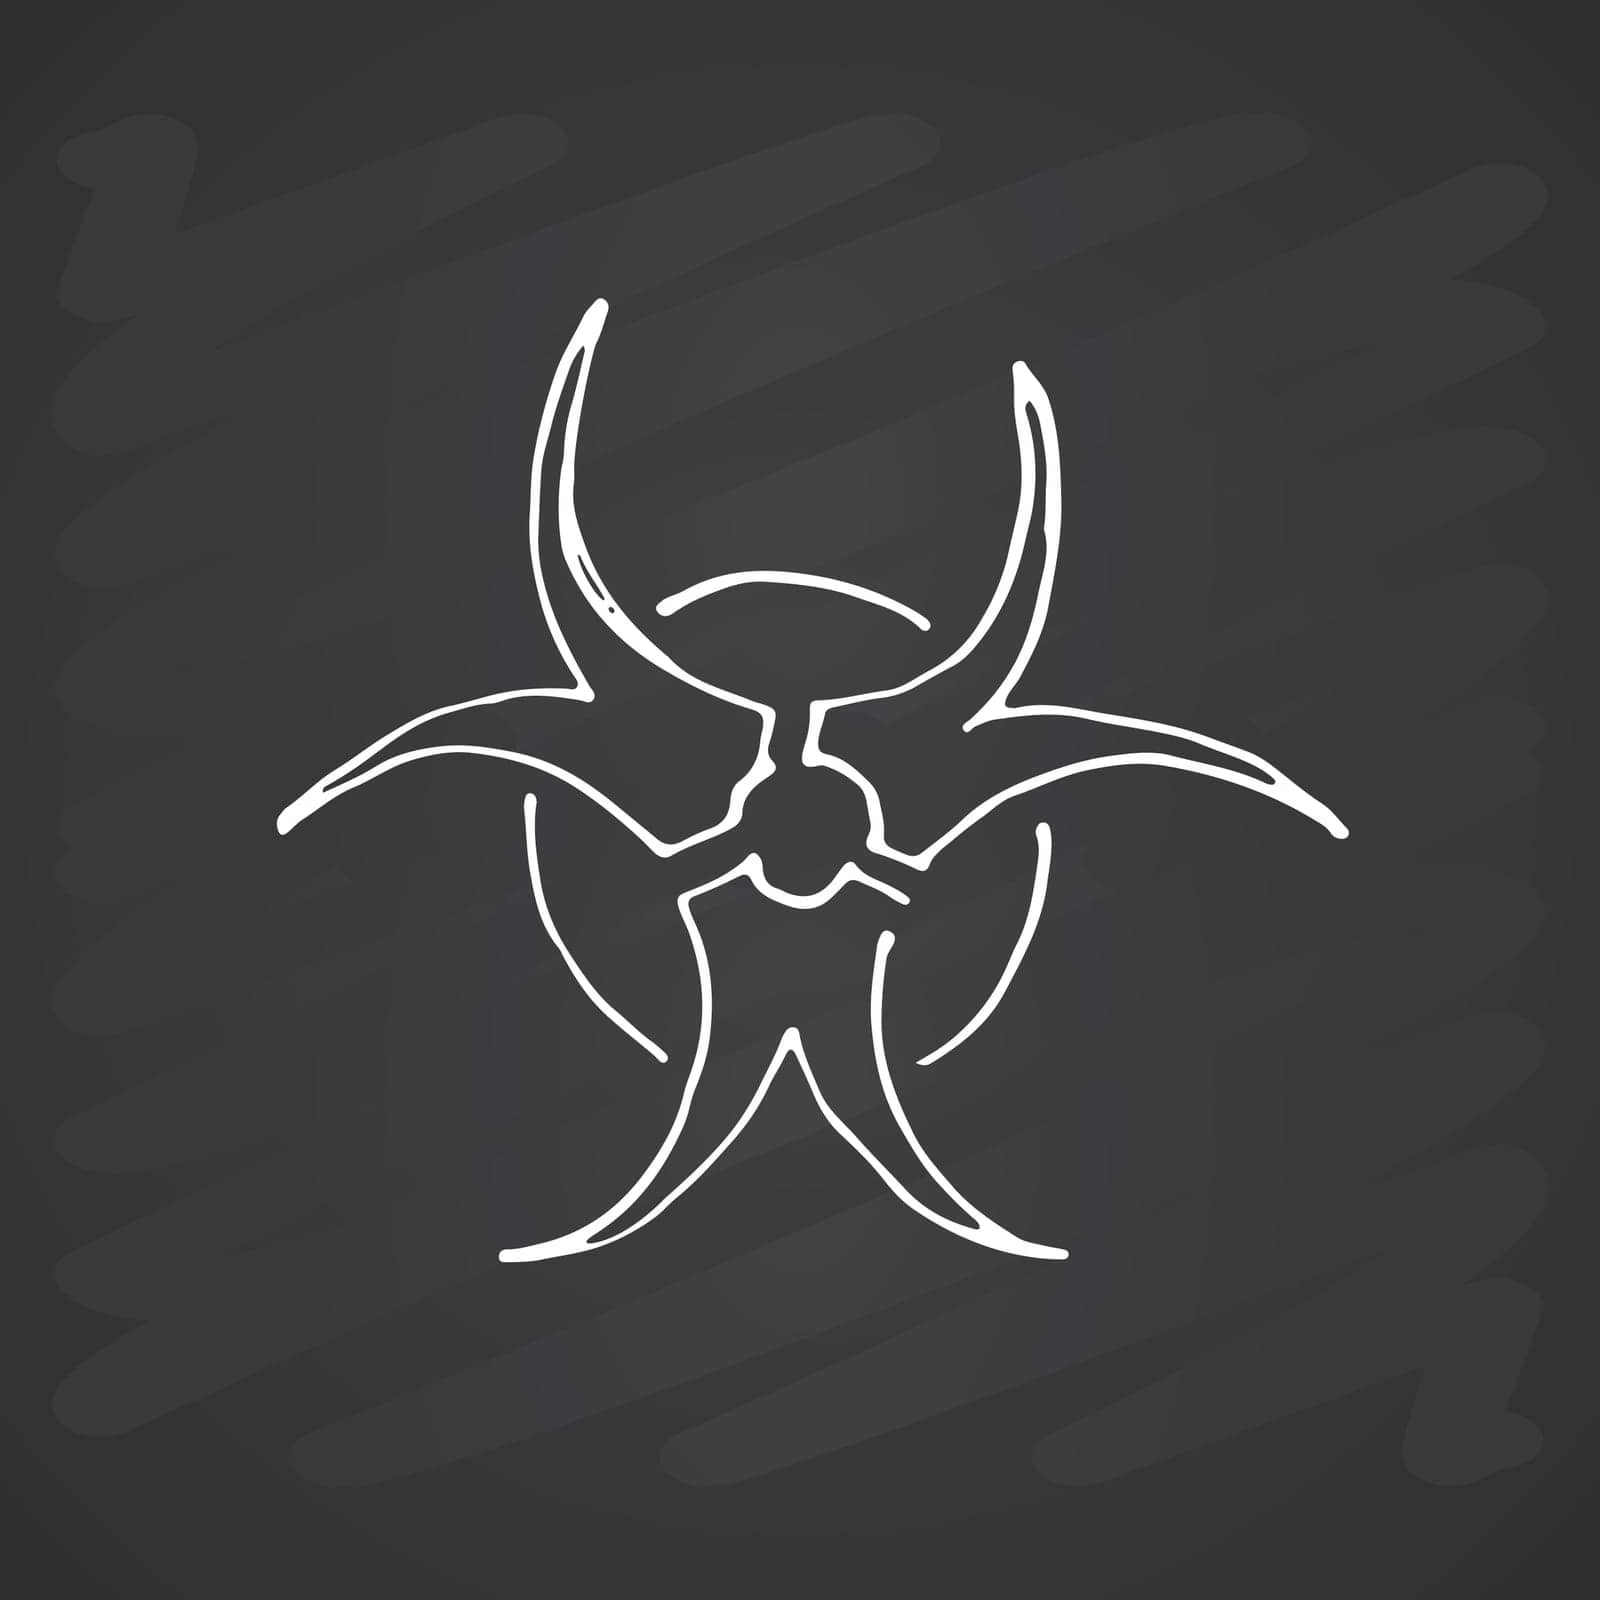 Biohazard symbol Hand Drawn icon. Vector illustration on chalkboard background by Lemon_workshop